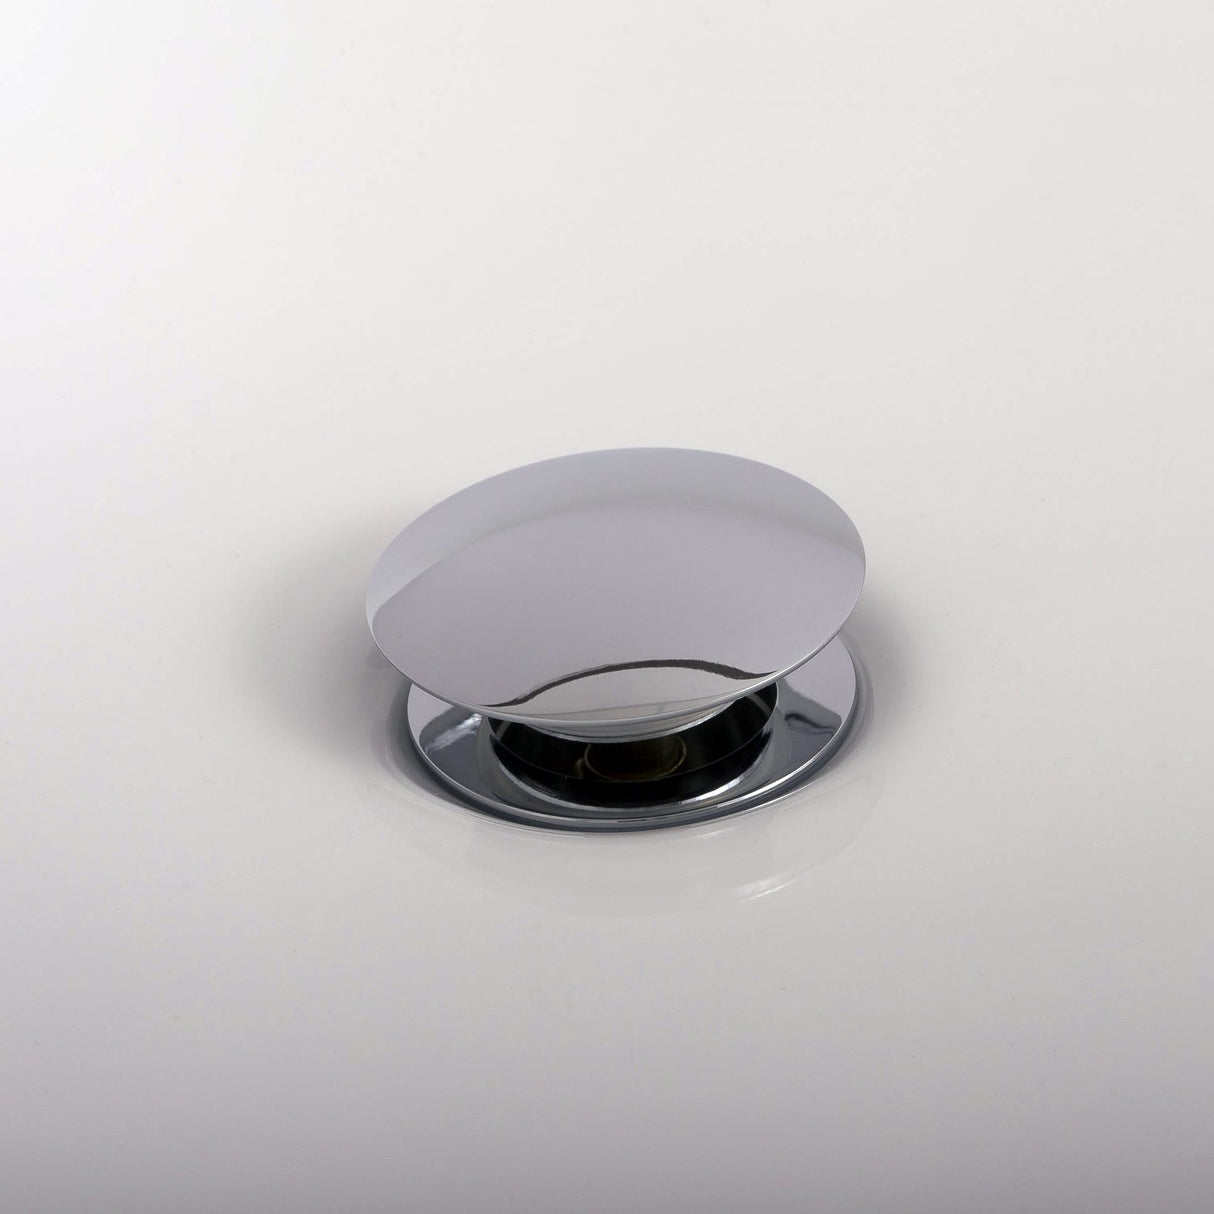 DAX Brass Round Vanity Sink Pop-Up Drain without Overflow, Chrome DAX-82005-CR